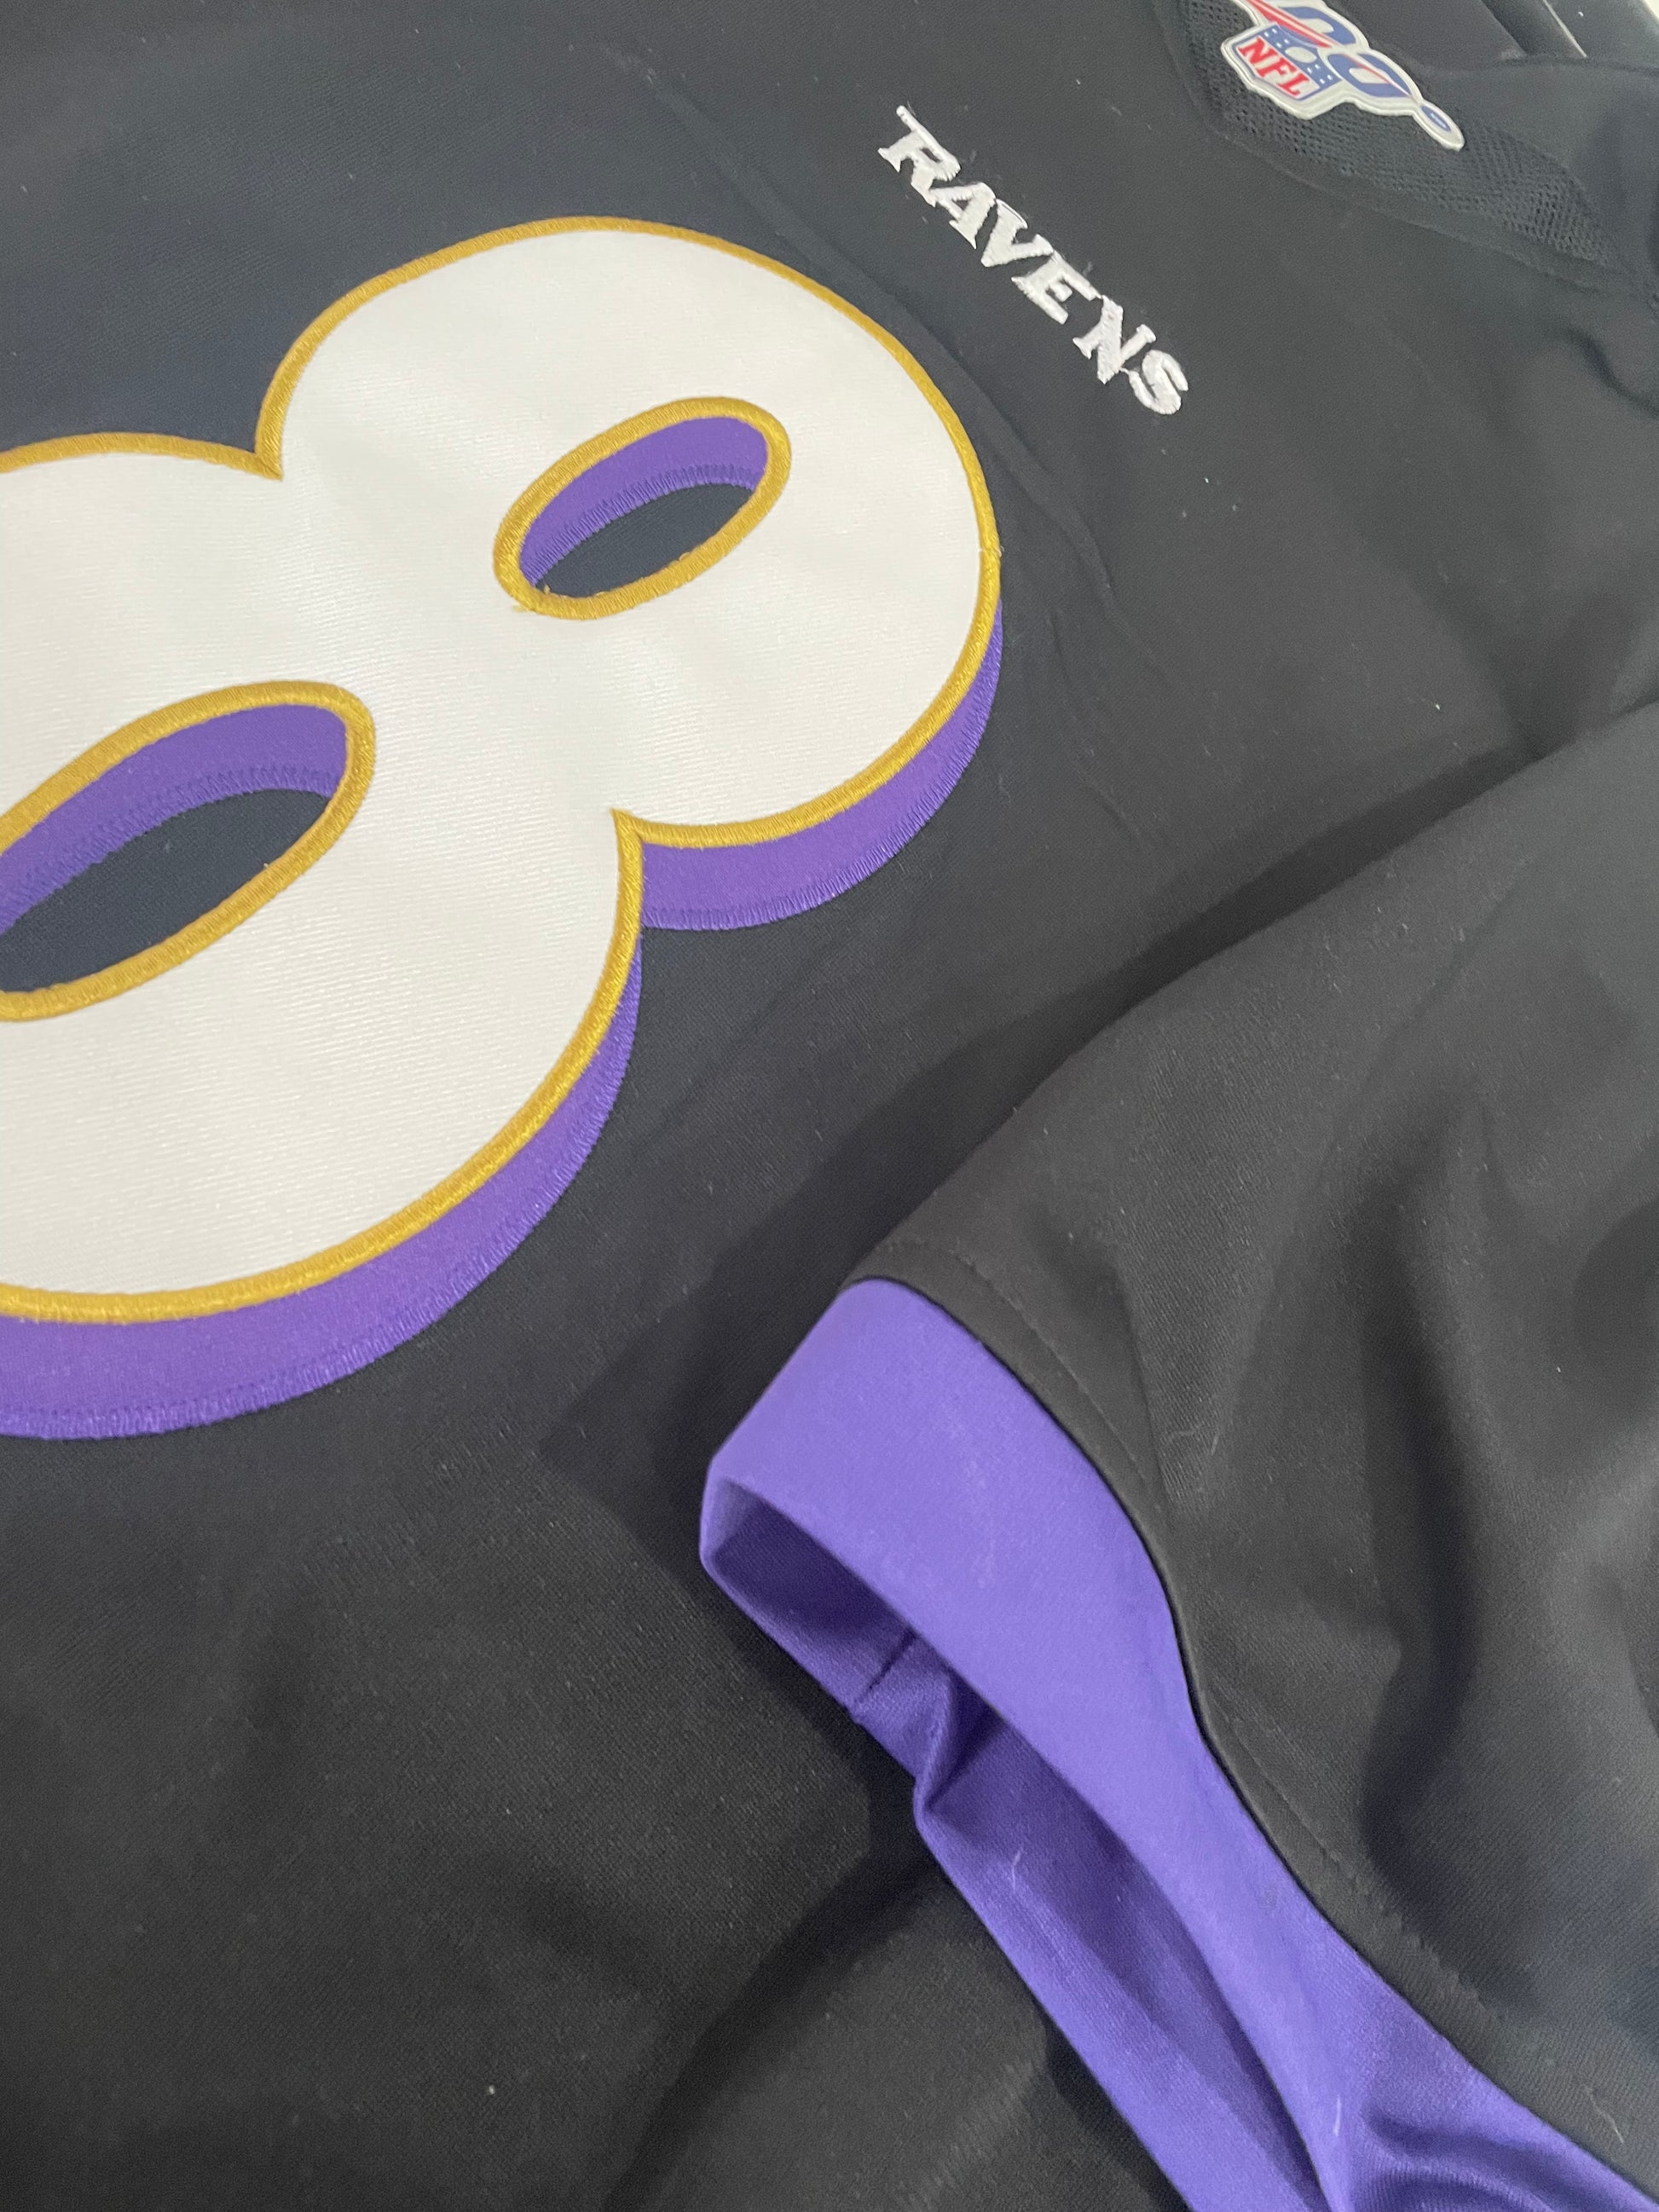 Lamar Jackson #8 Baltimore Ravens Men's Large Jersey Black Stitched New NFL